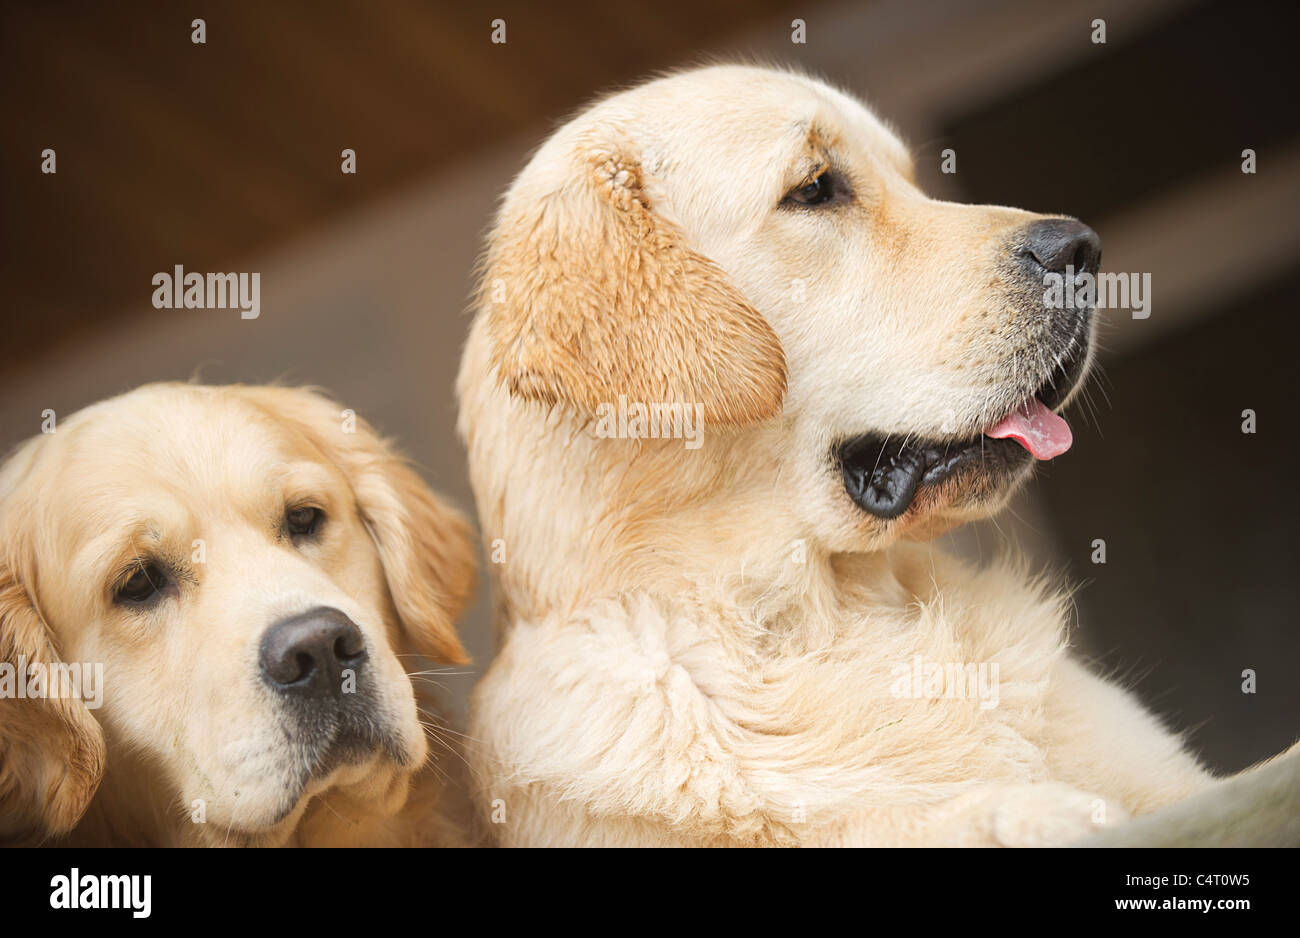 golden retrievers dog dogs Stock Photo